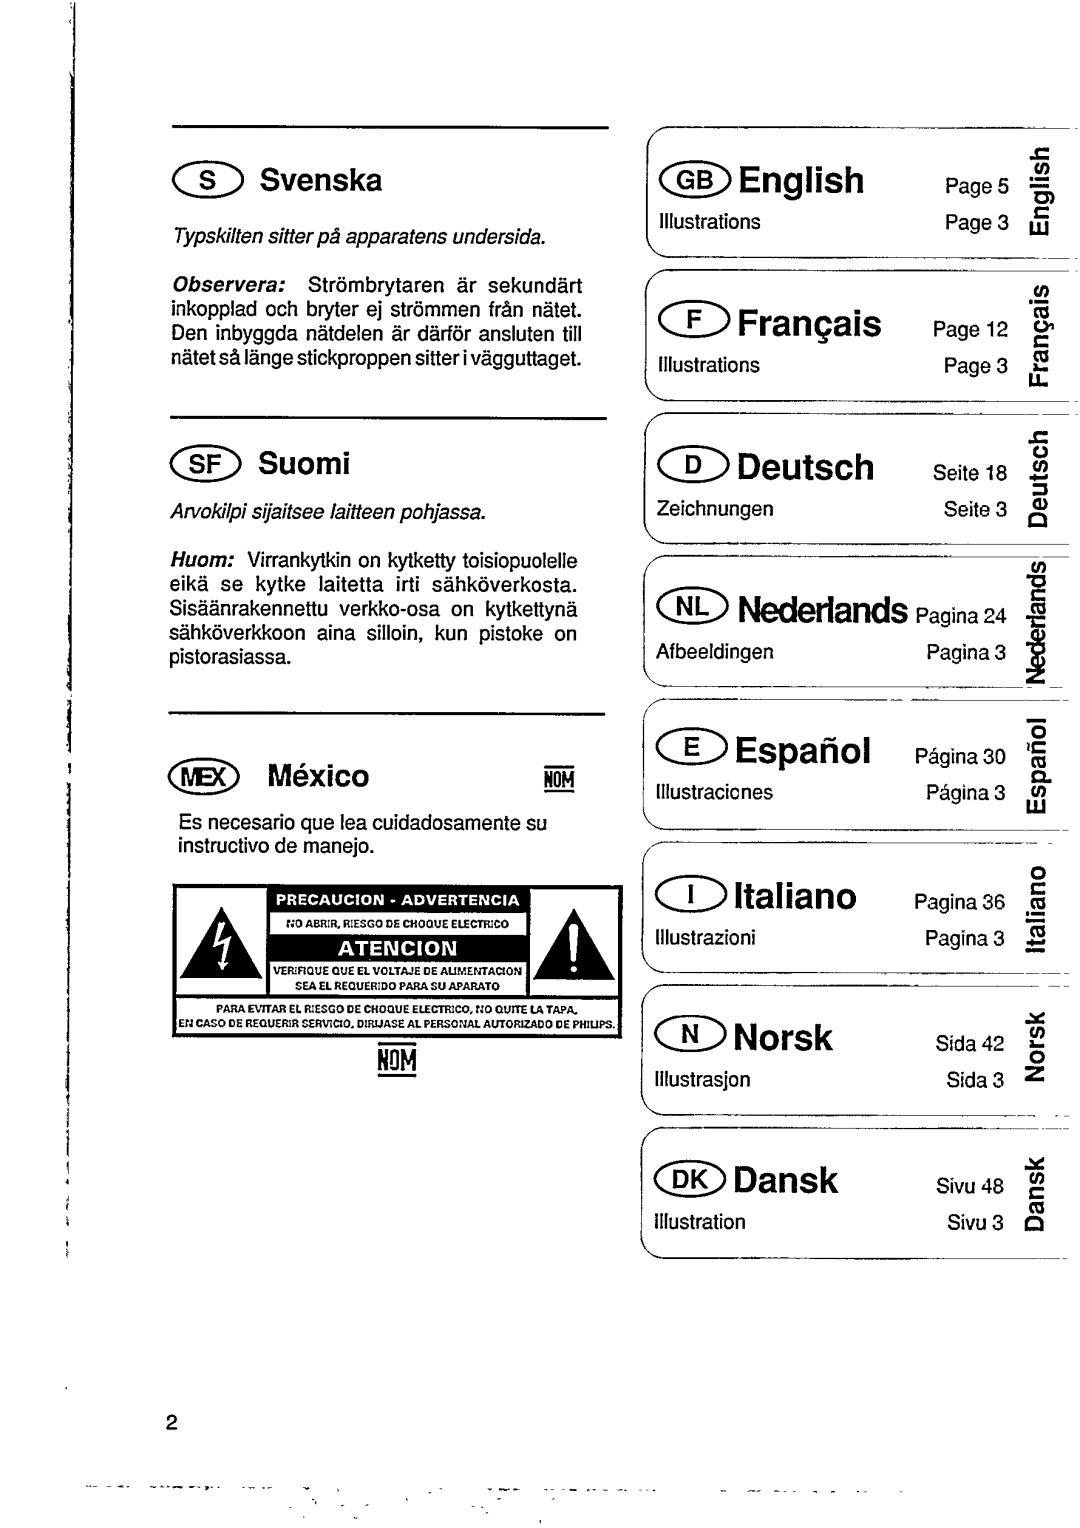 Philips Stereo Radio-Cassette Recorder manual 